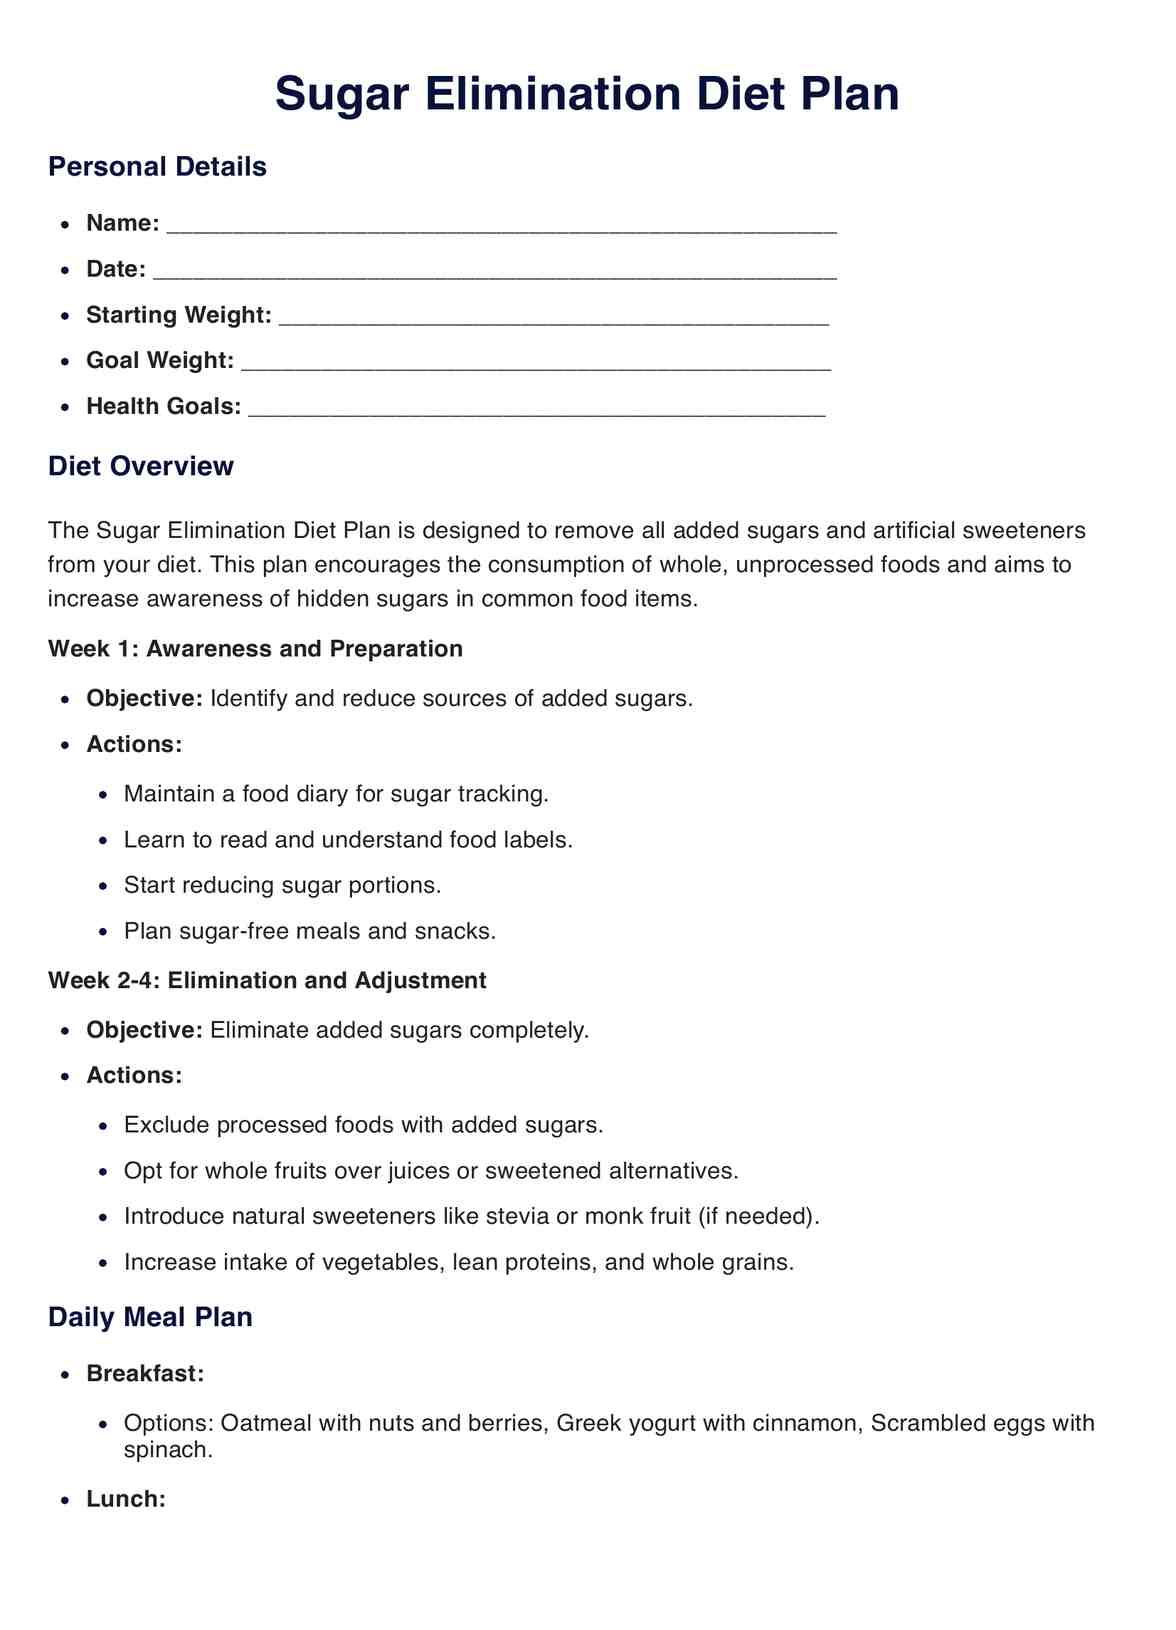 Sugar Elimination Diet Plan PDF Example